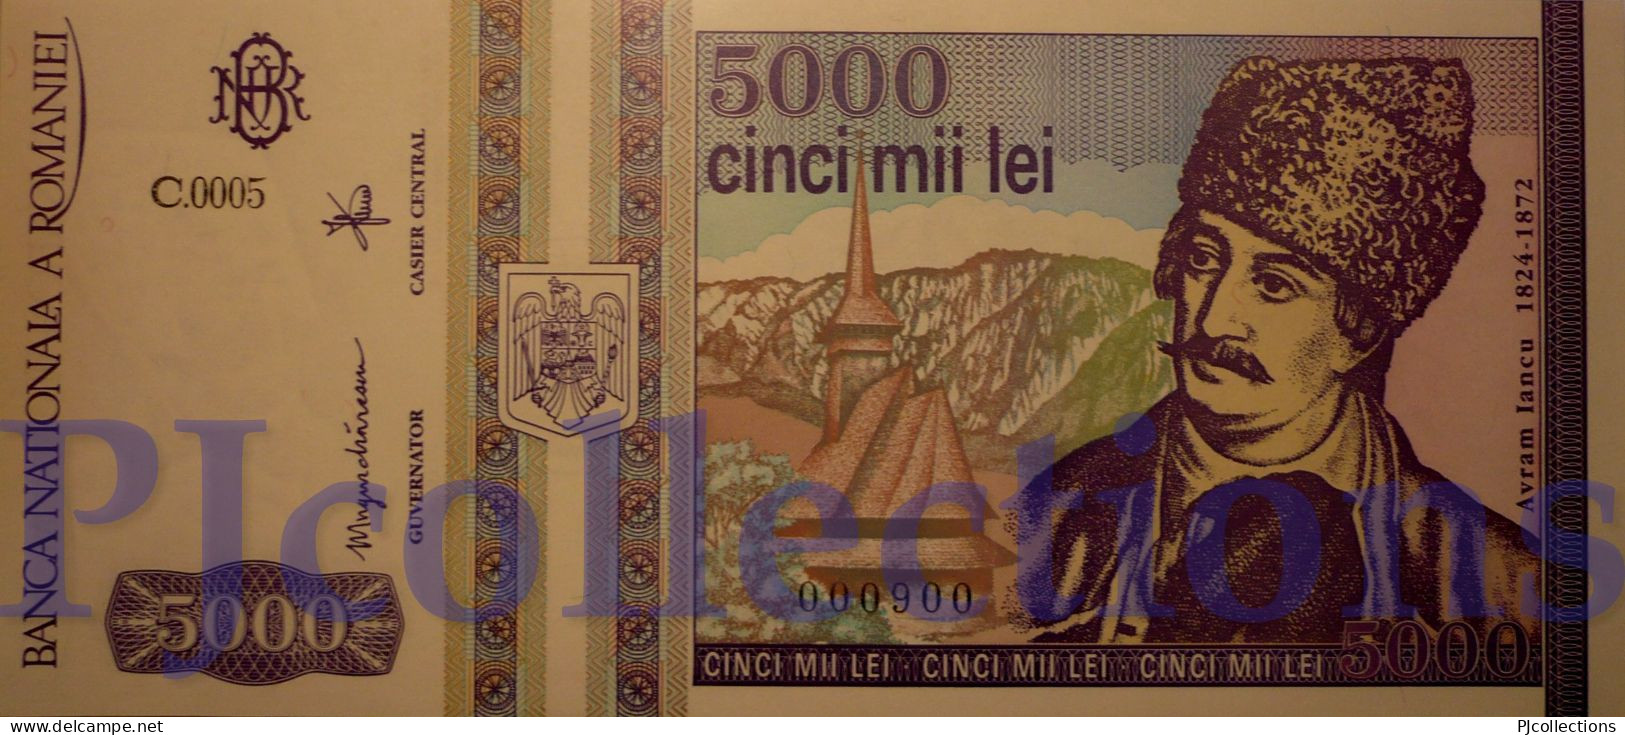 ROMANIA 5000 LEI 1993 PICK 104a UNC LOW & GOOD SERIAL NUMBER "000900" - Rumania